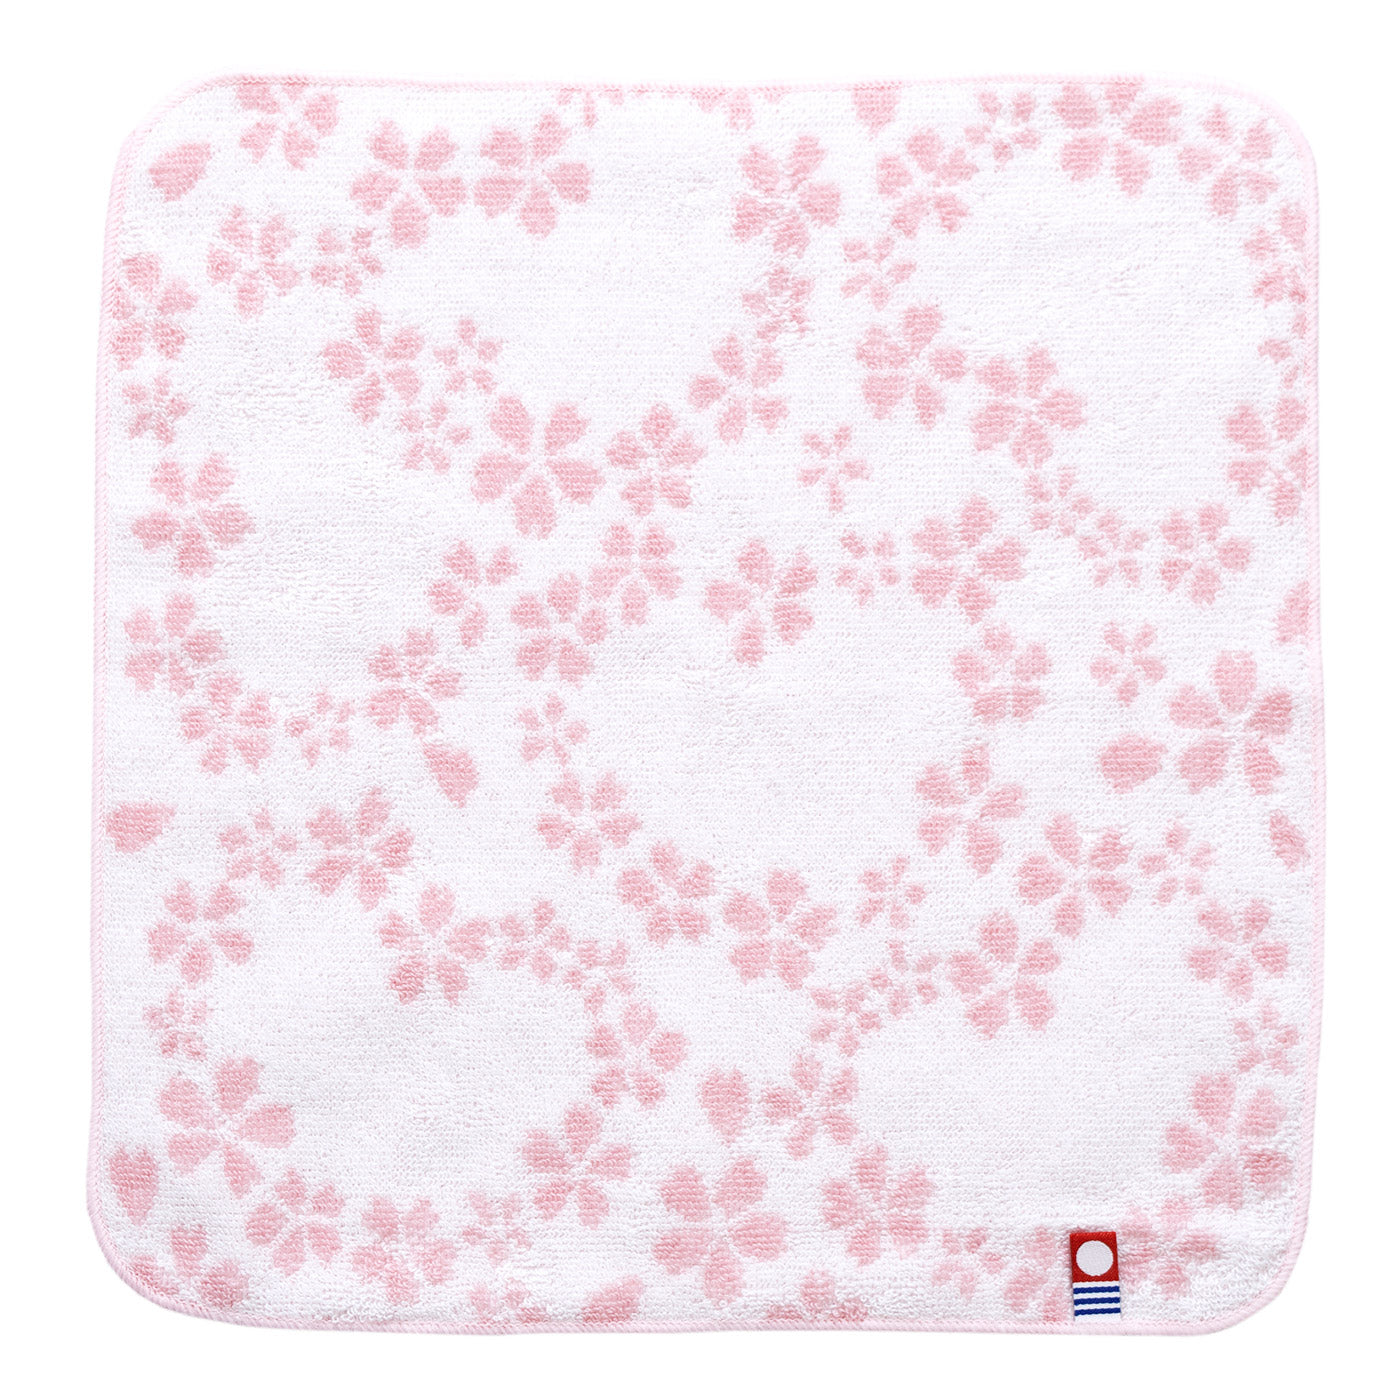 FORTUNA Tokyo Imabari Handkerchief Sakura Cherry Blossoms Design Mini Towel Cotton 100%, Made in Japan FORTUNA Tokyo